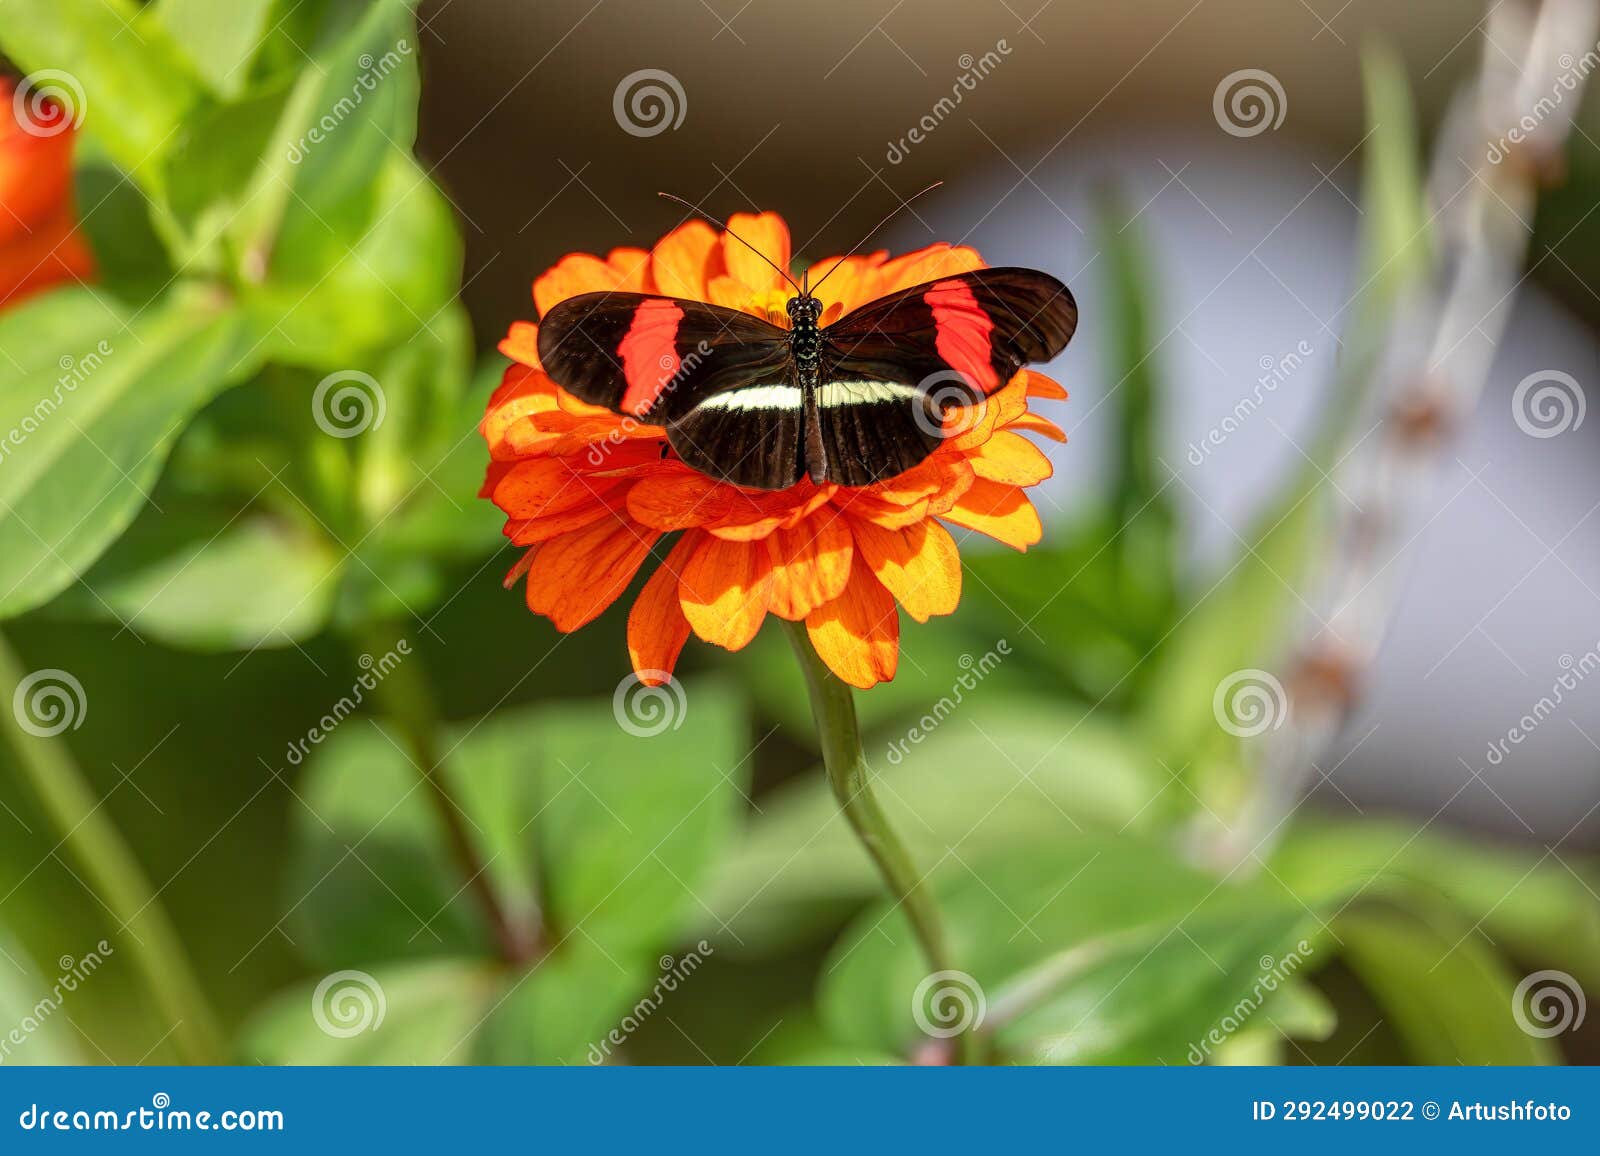 heliconius erato cruentus butterfly, refugio de vida silvestre cano negro, costa rica wildlife